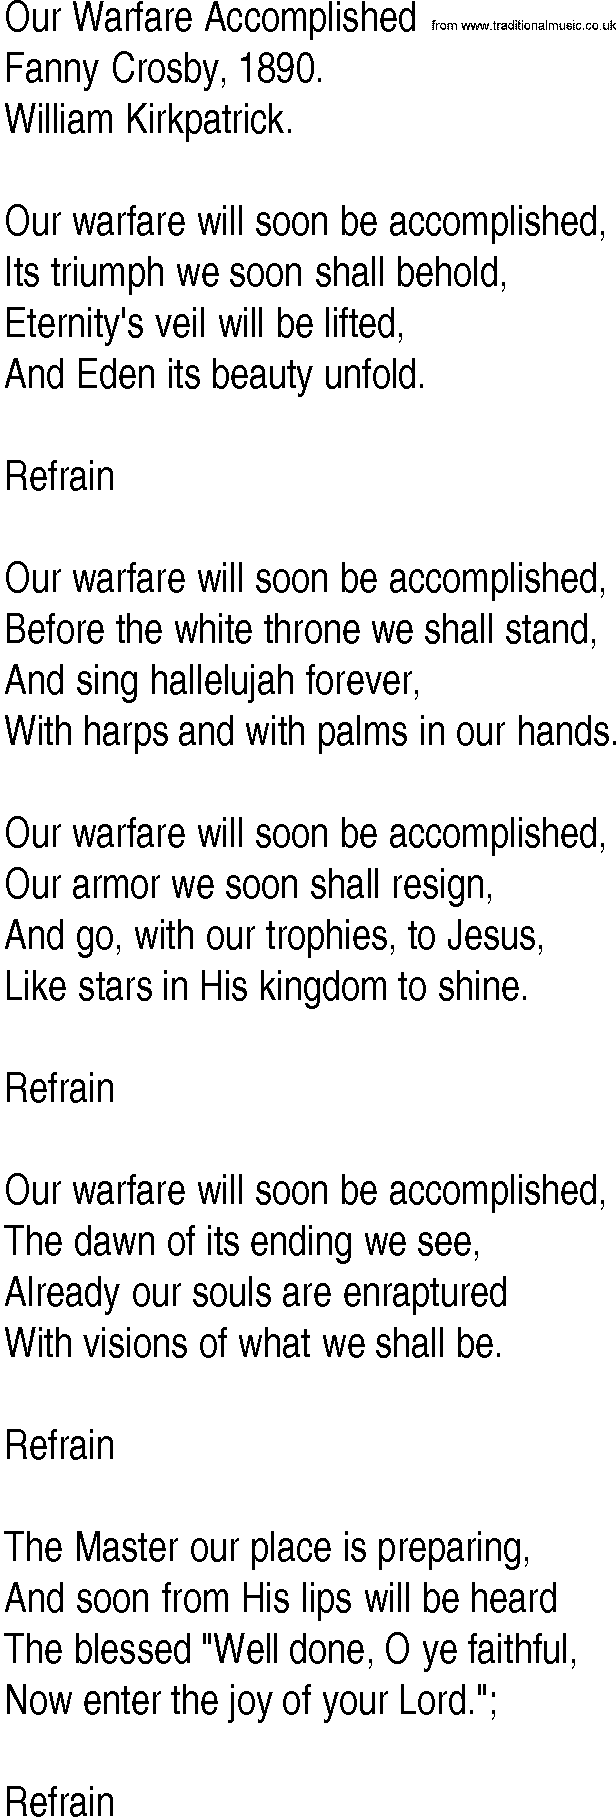 Hymn and Gospel Song: Our Warfare Accomplished by Fanny Crosby lyrics